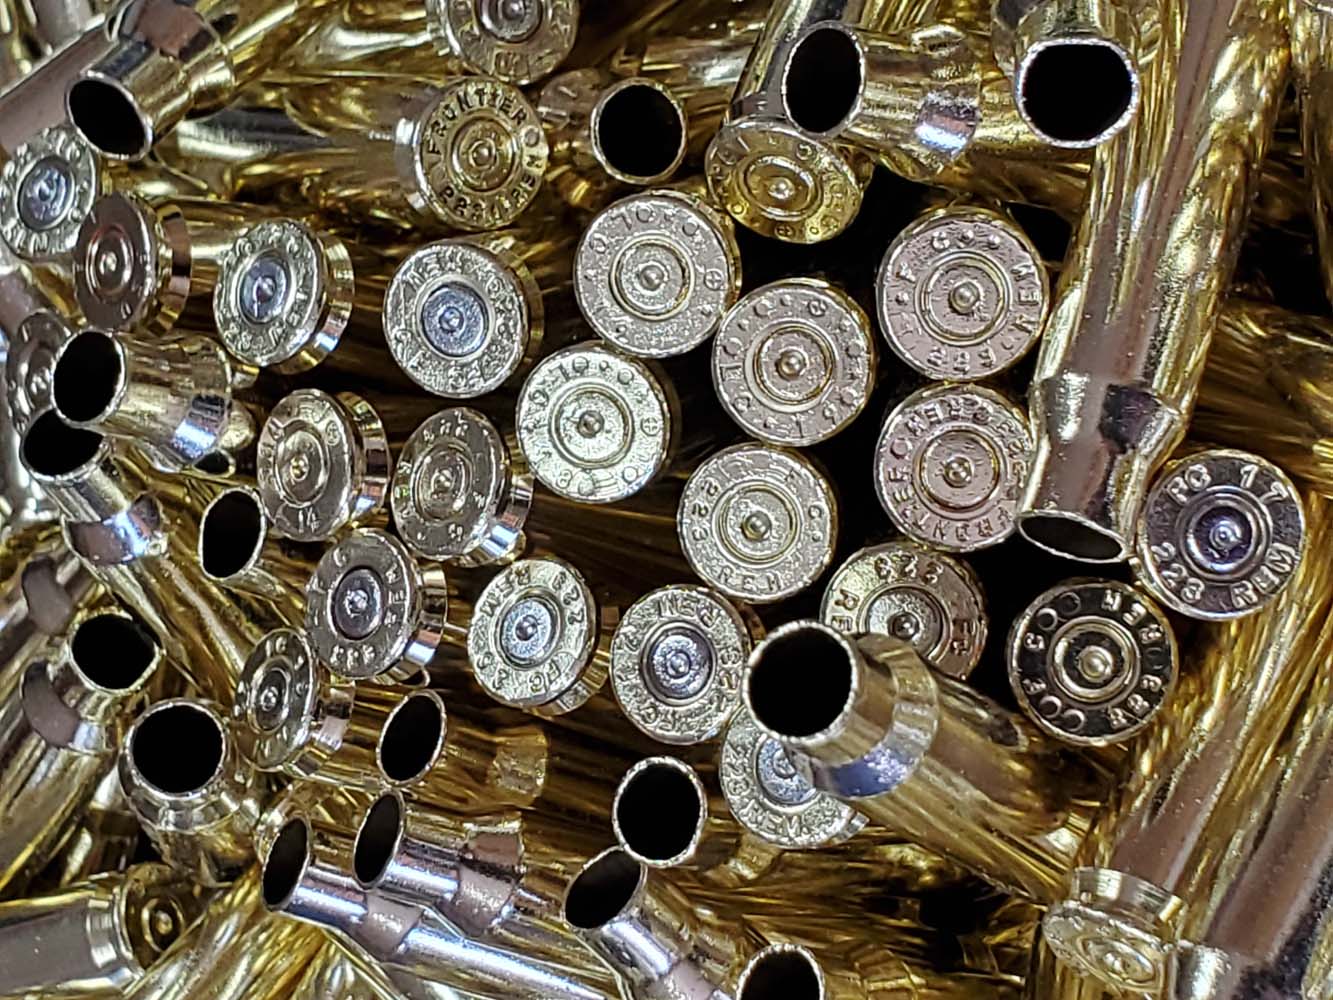 223 Rem 5.56 NATO Dirty Brass Shells Empty Spent Bullet Casings